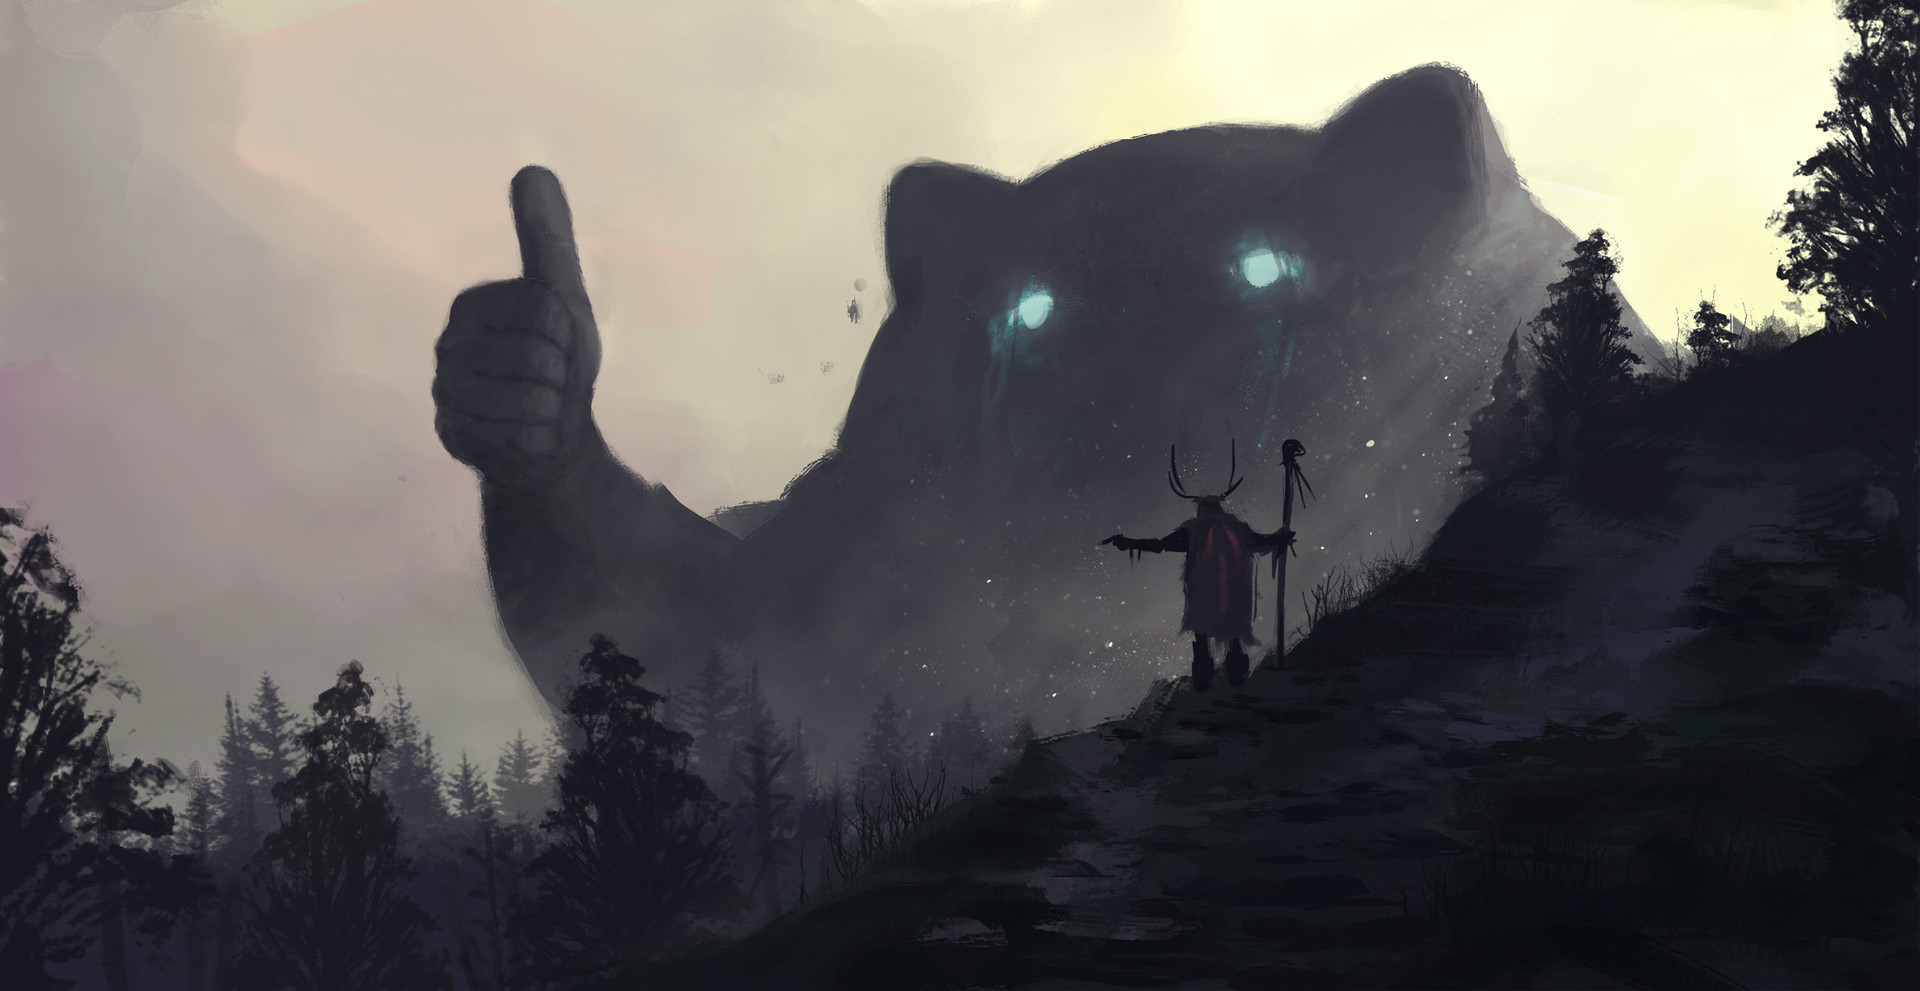 druids, Spirits, Thumbs up, Fantasy art, Forest, Mountains, Mist, Giant Wallpaper